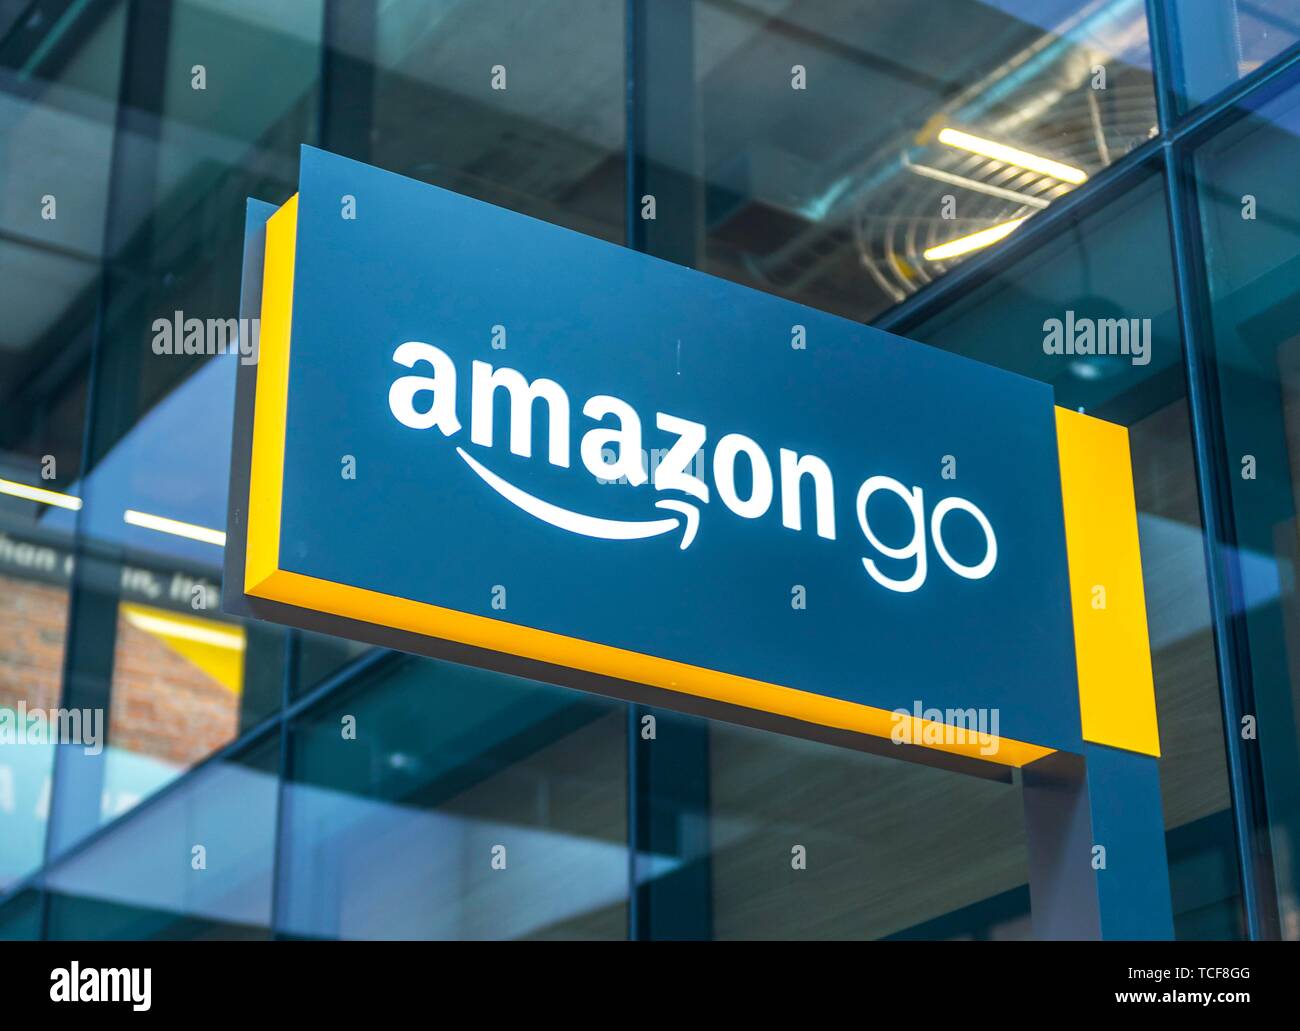 Amazon Go store, American automated supermarket chain, cashless supermarket, Seattle, Washington, USA, North America Stock Photo